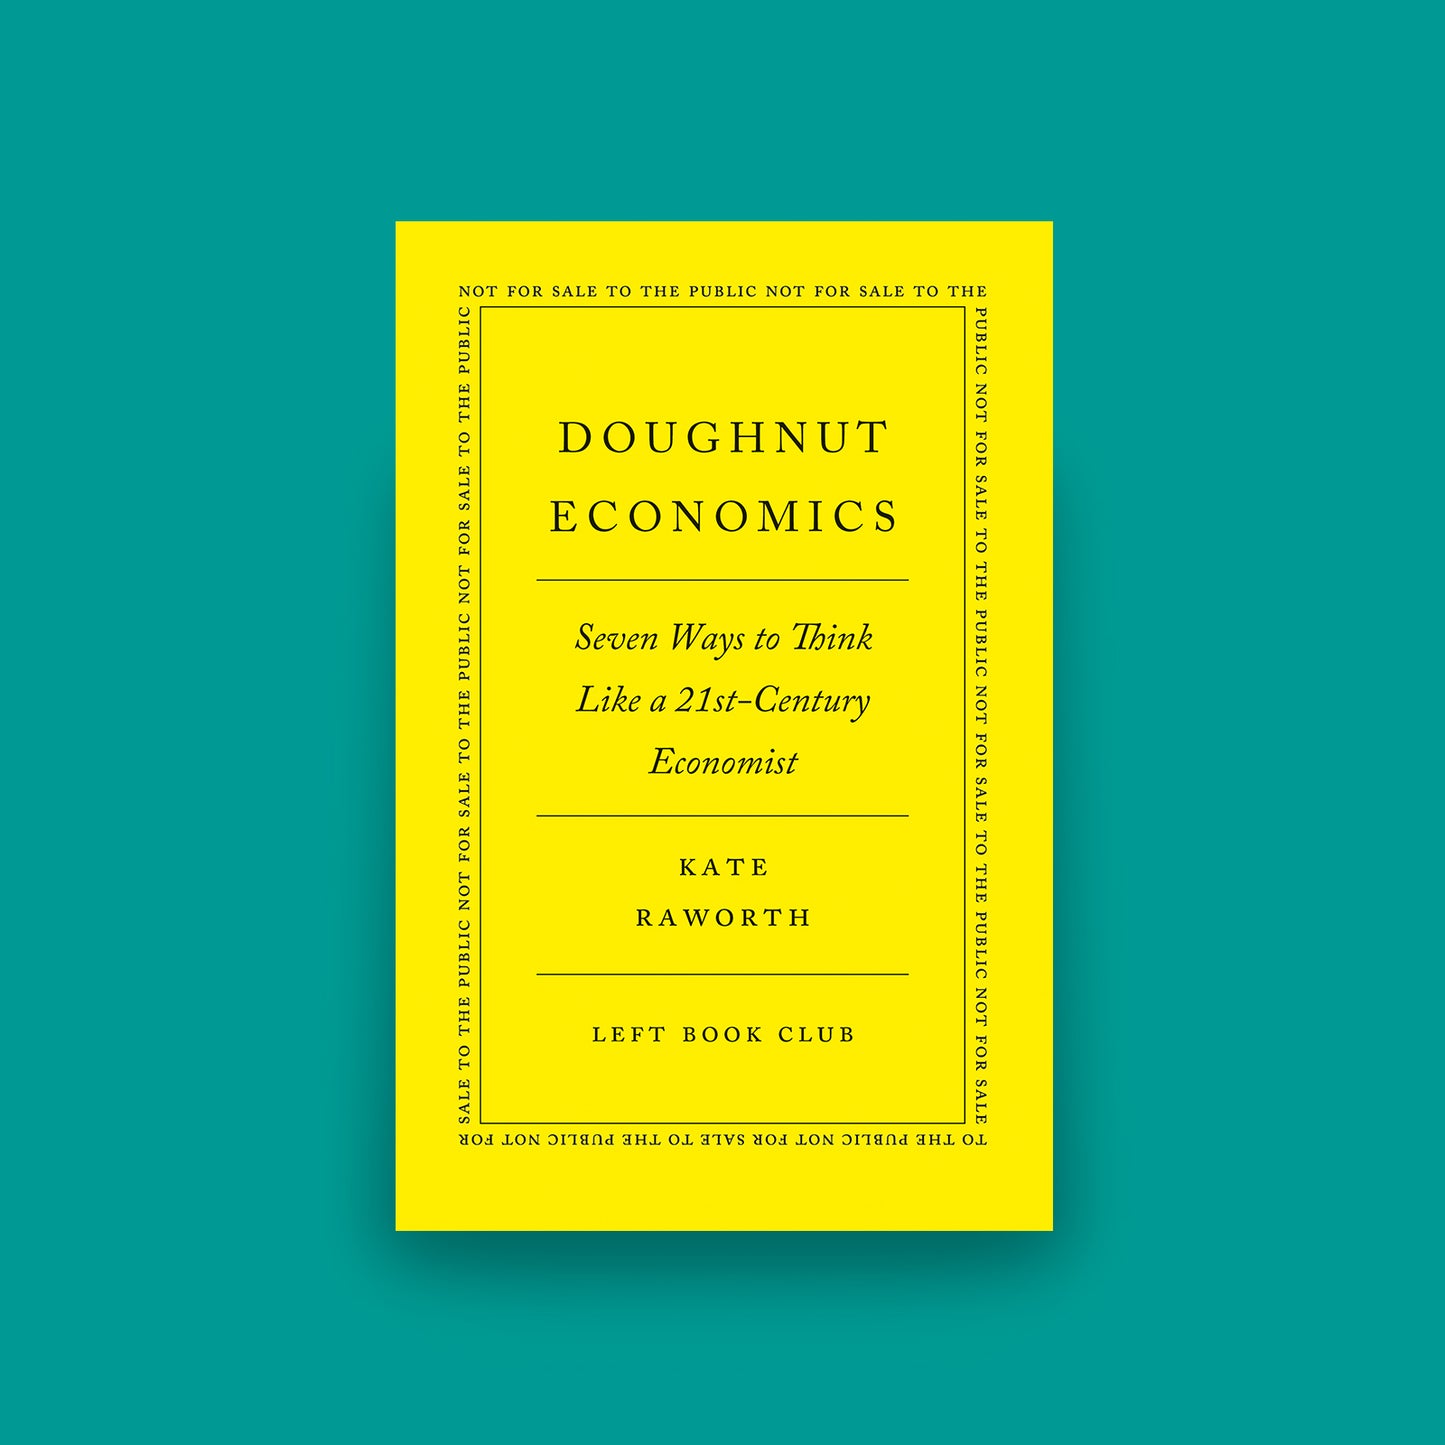 Exploring Economics Bundle